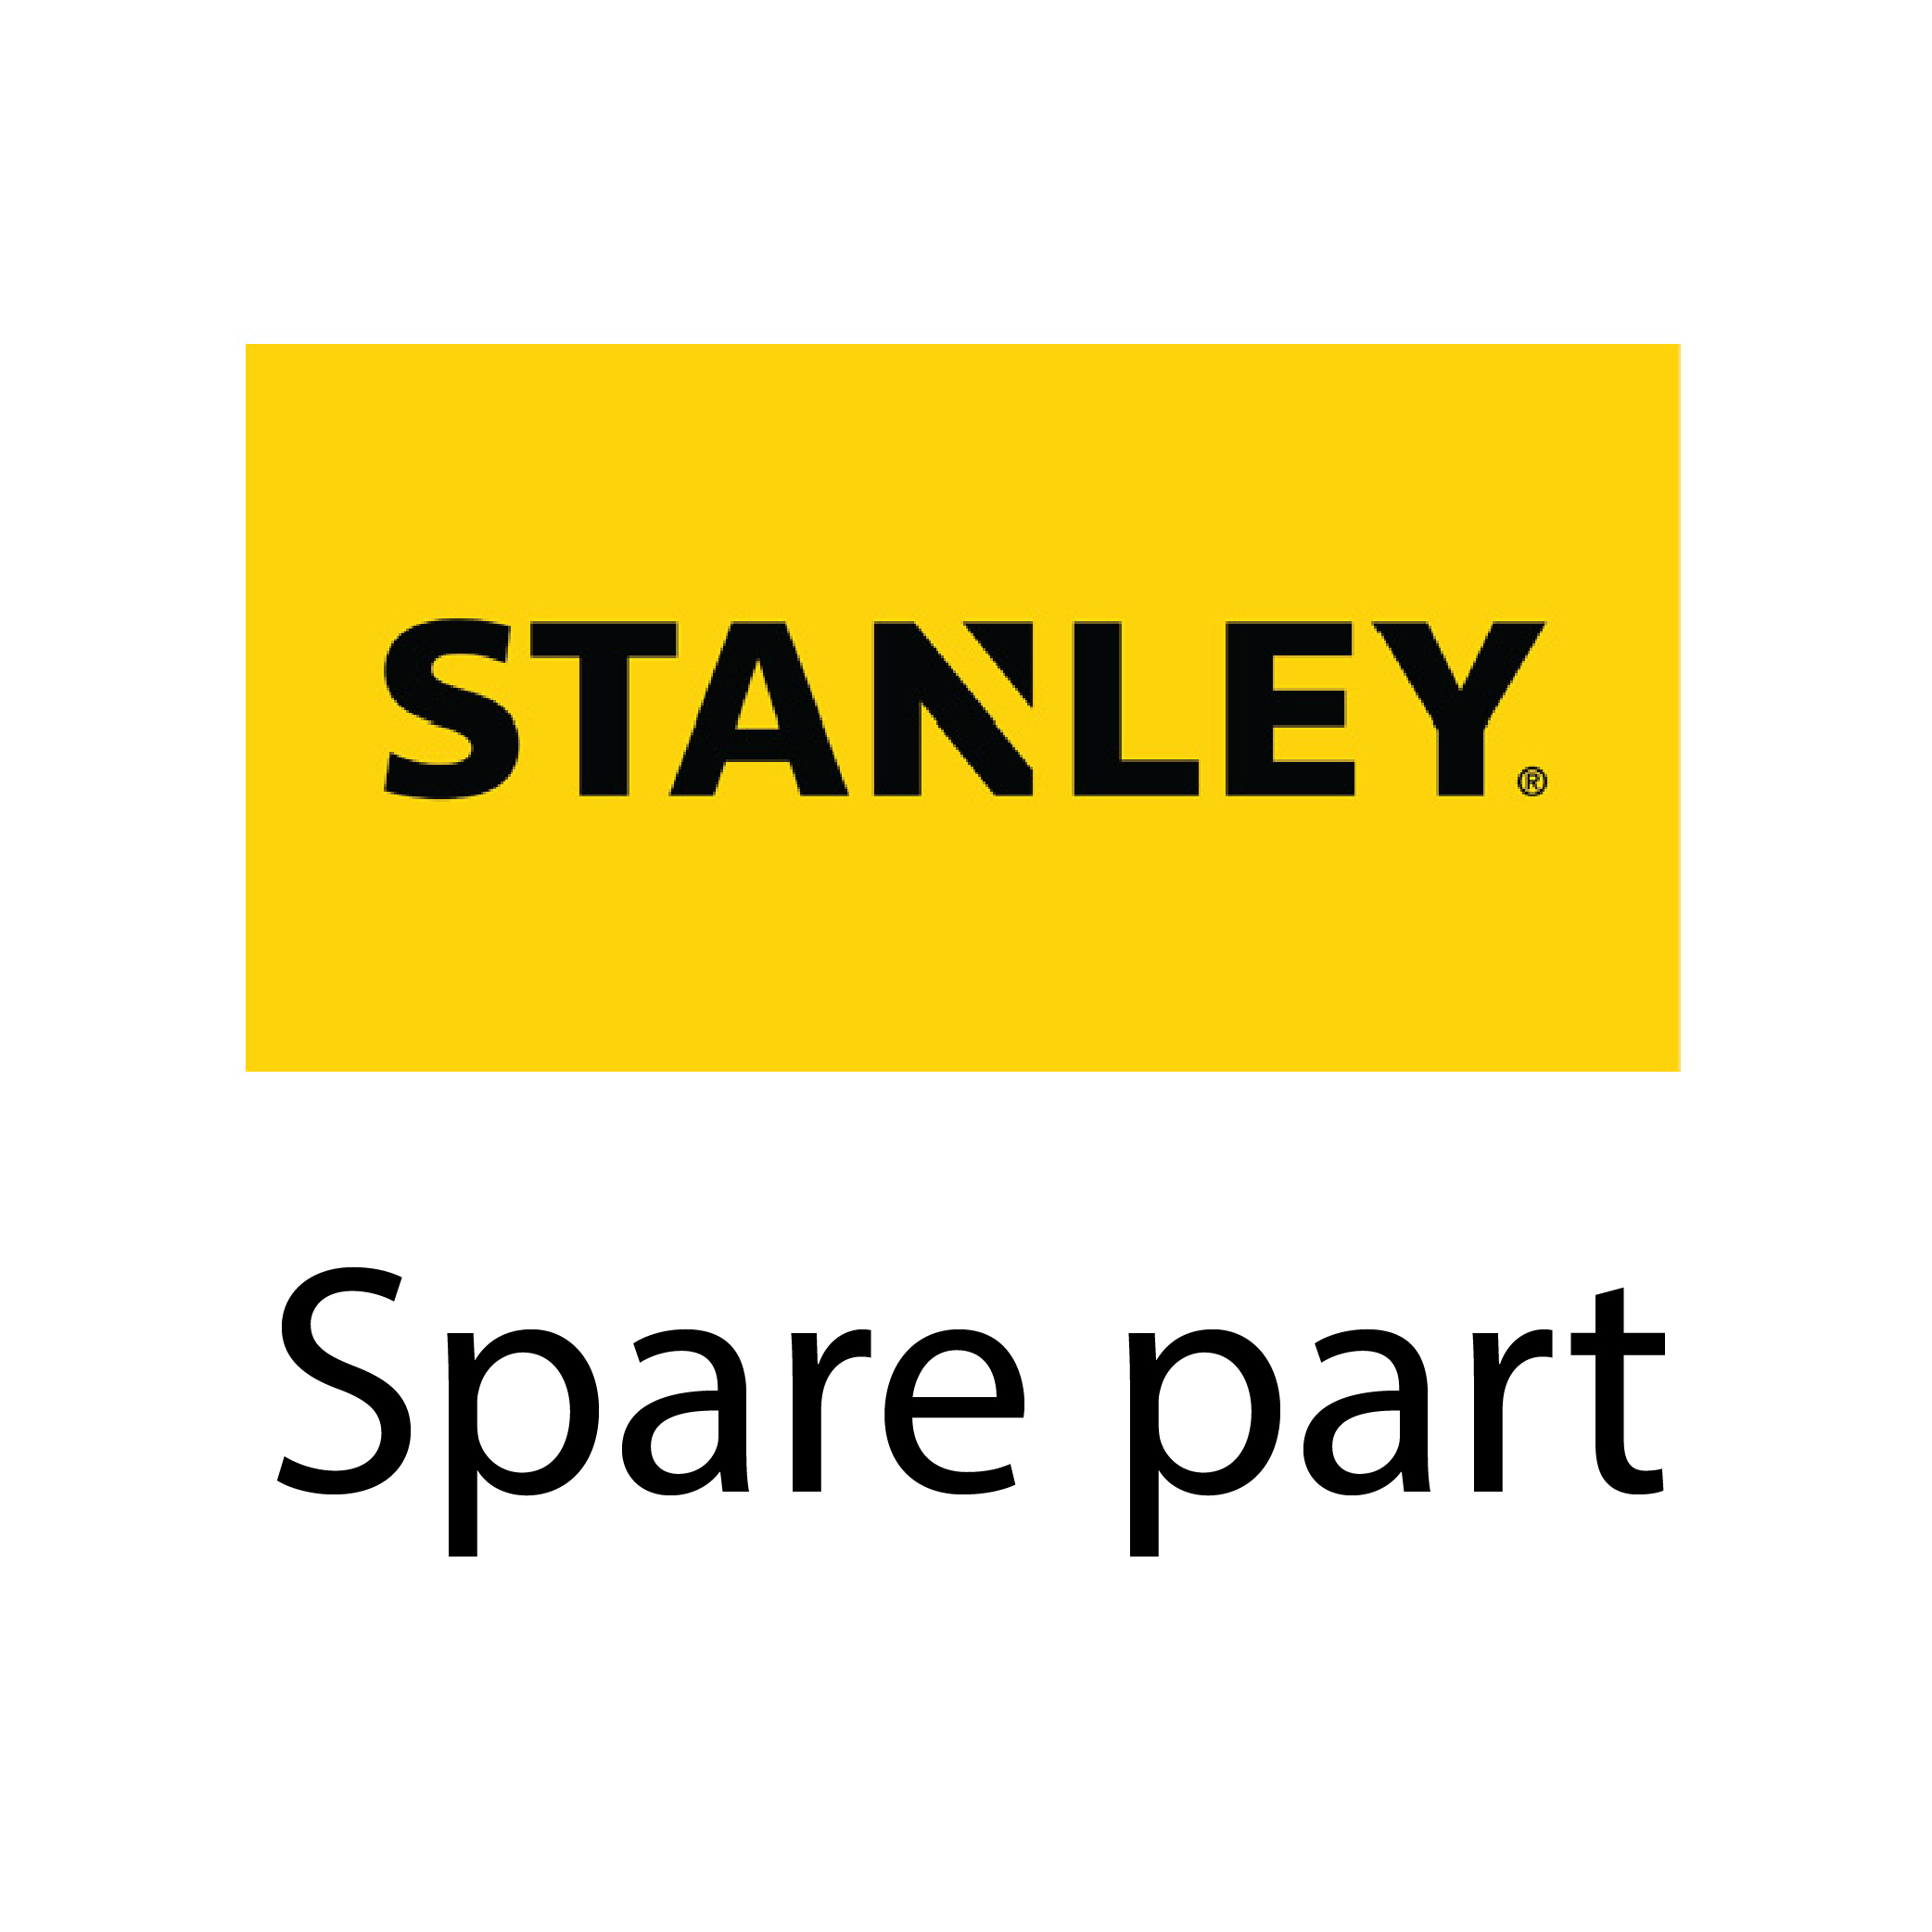 SKI - สกี จำหน่ายสินค้าหลากหลาย และคุณภาพดี | STANLEY #1004525-33 ฟิวคอยส์ STEL815